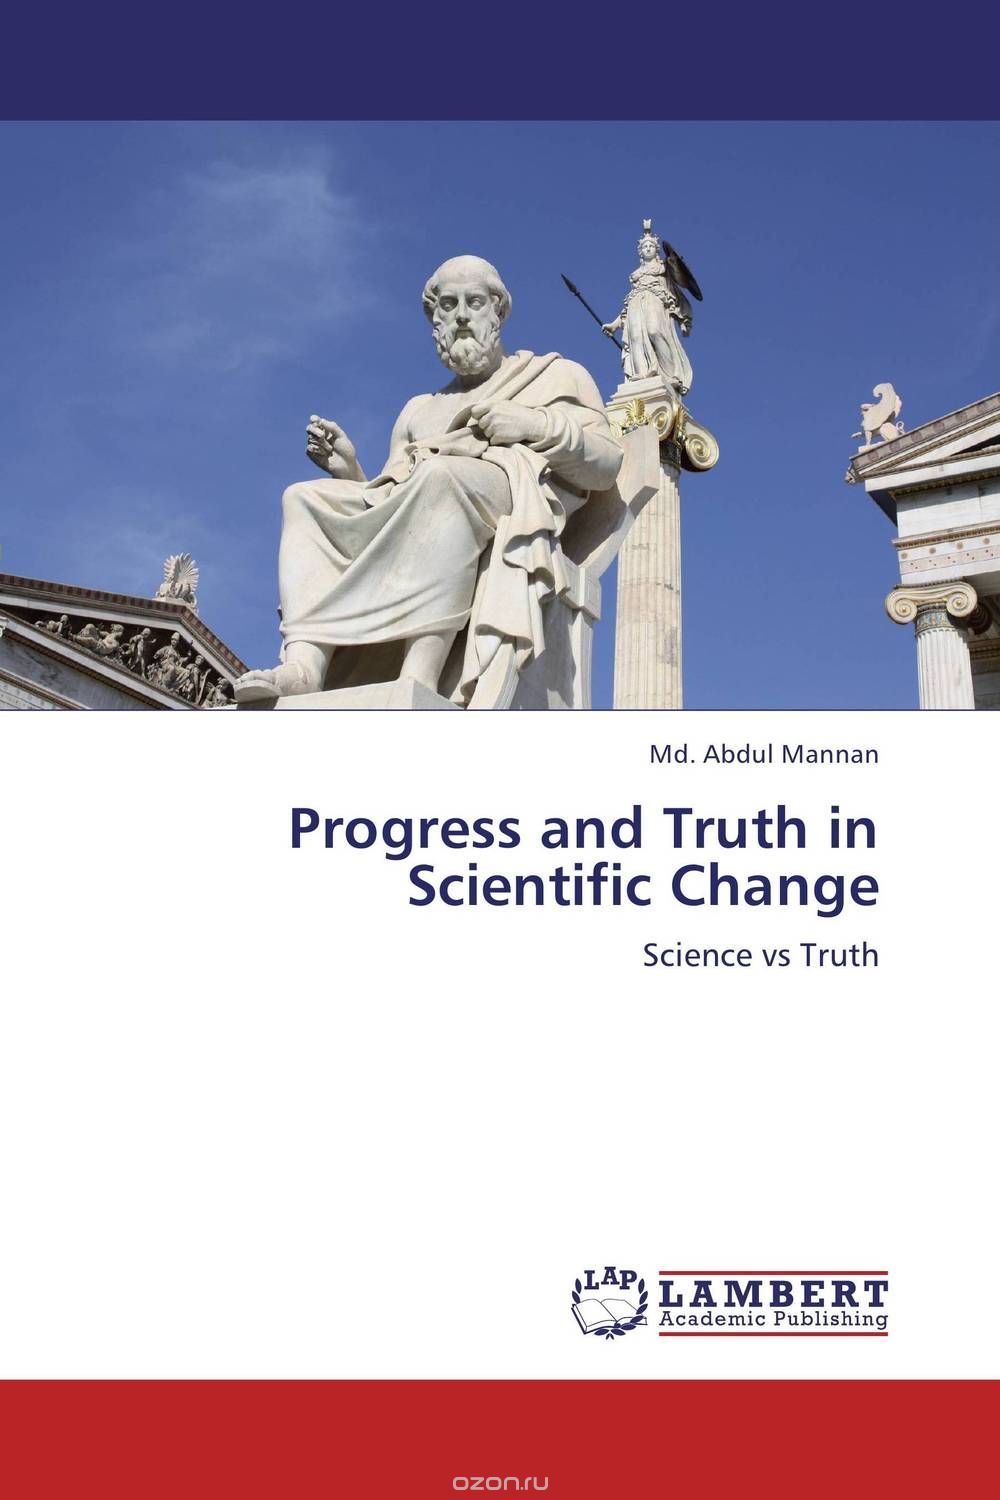 Скачать книгу "Progress and Truth in Scientific Change"